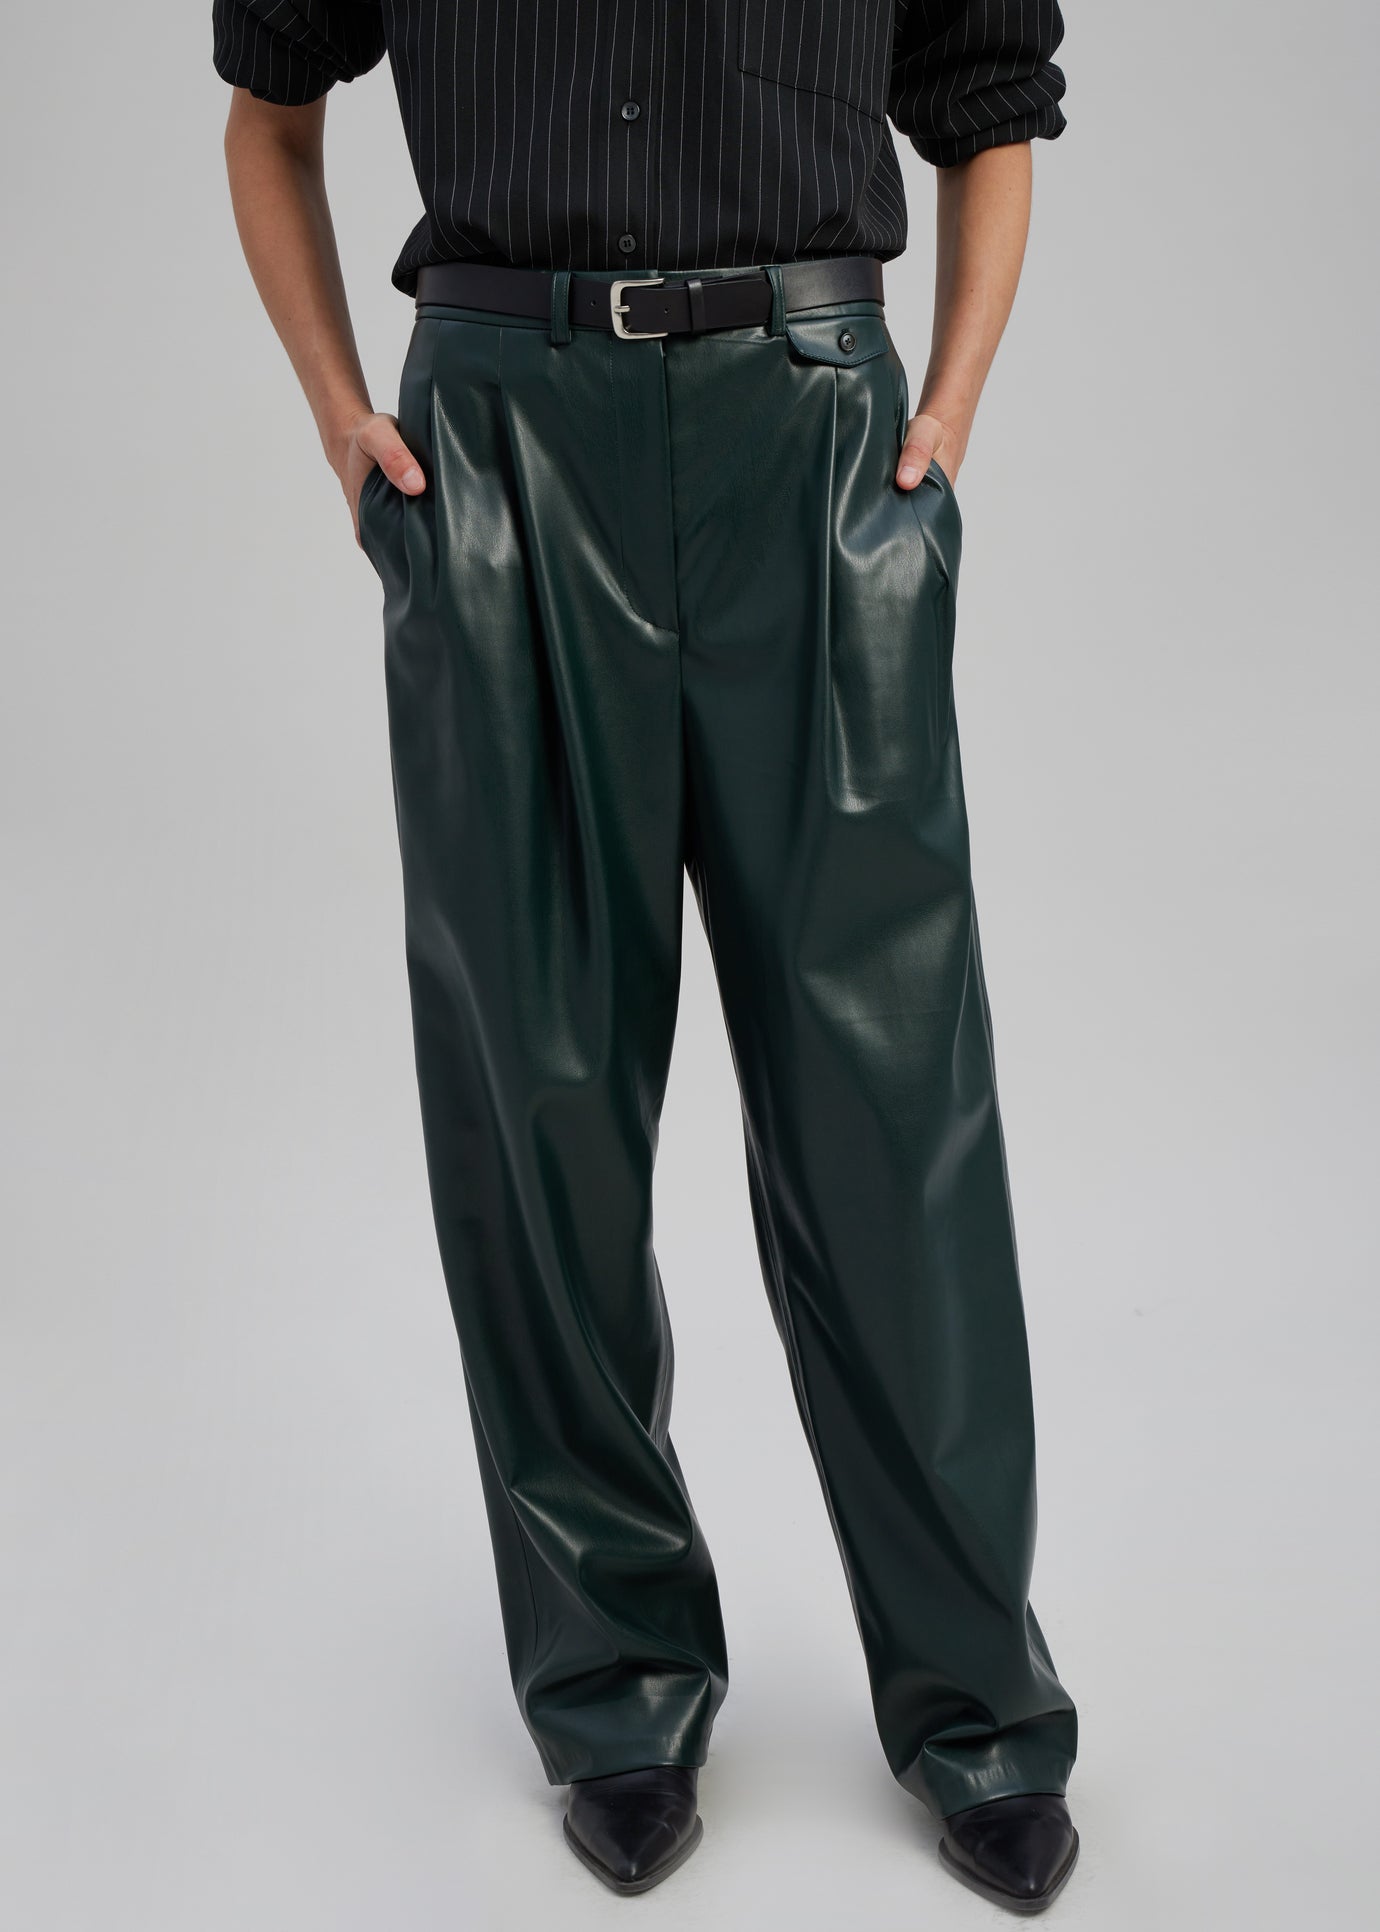 Pernille Faux Leather Pants - Bottle Green - 1